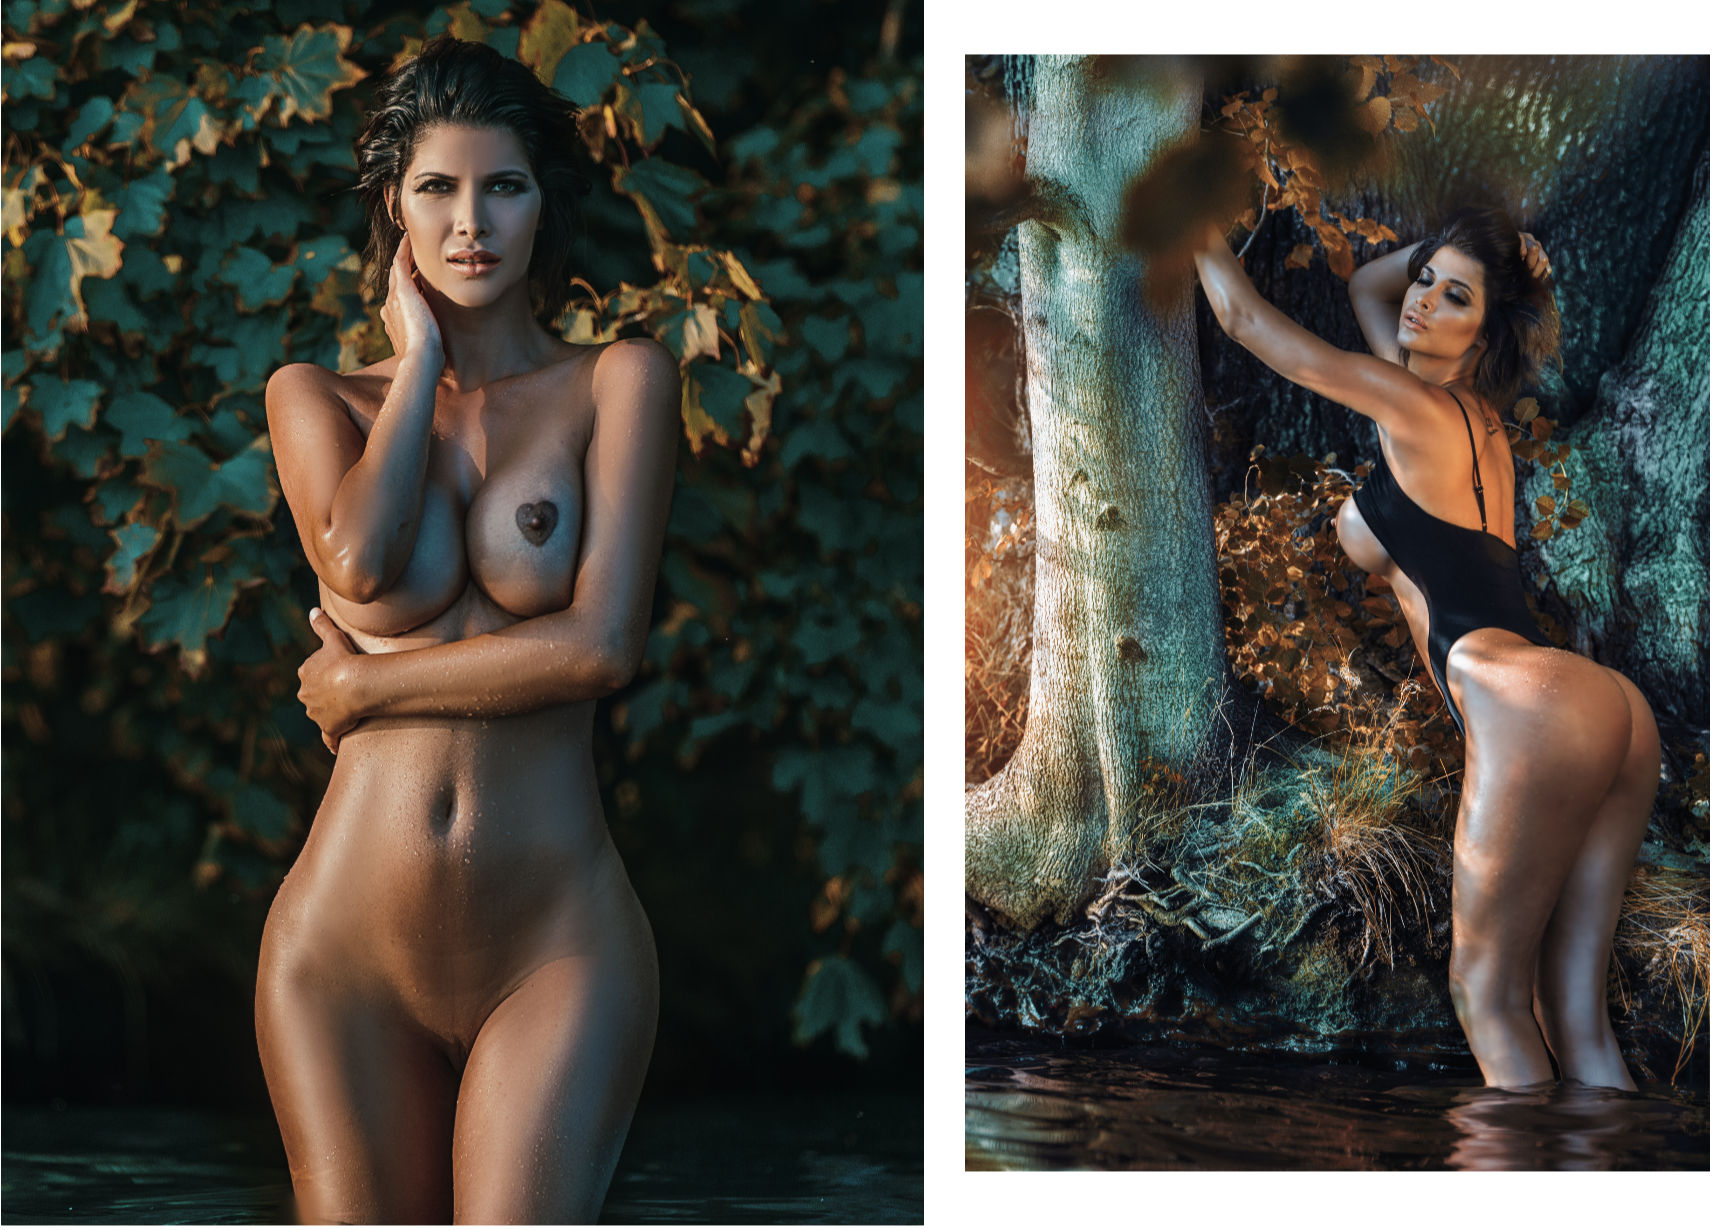 Micaela Schäfer Naked (5 Hot Photos)